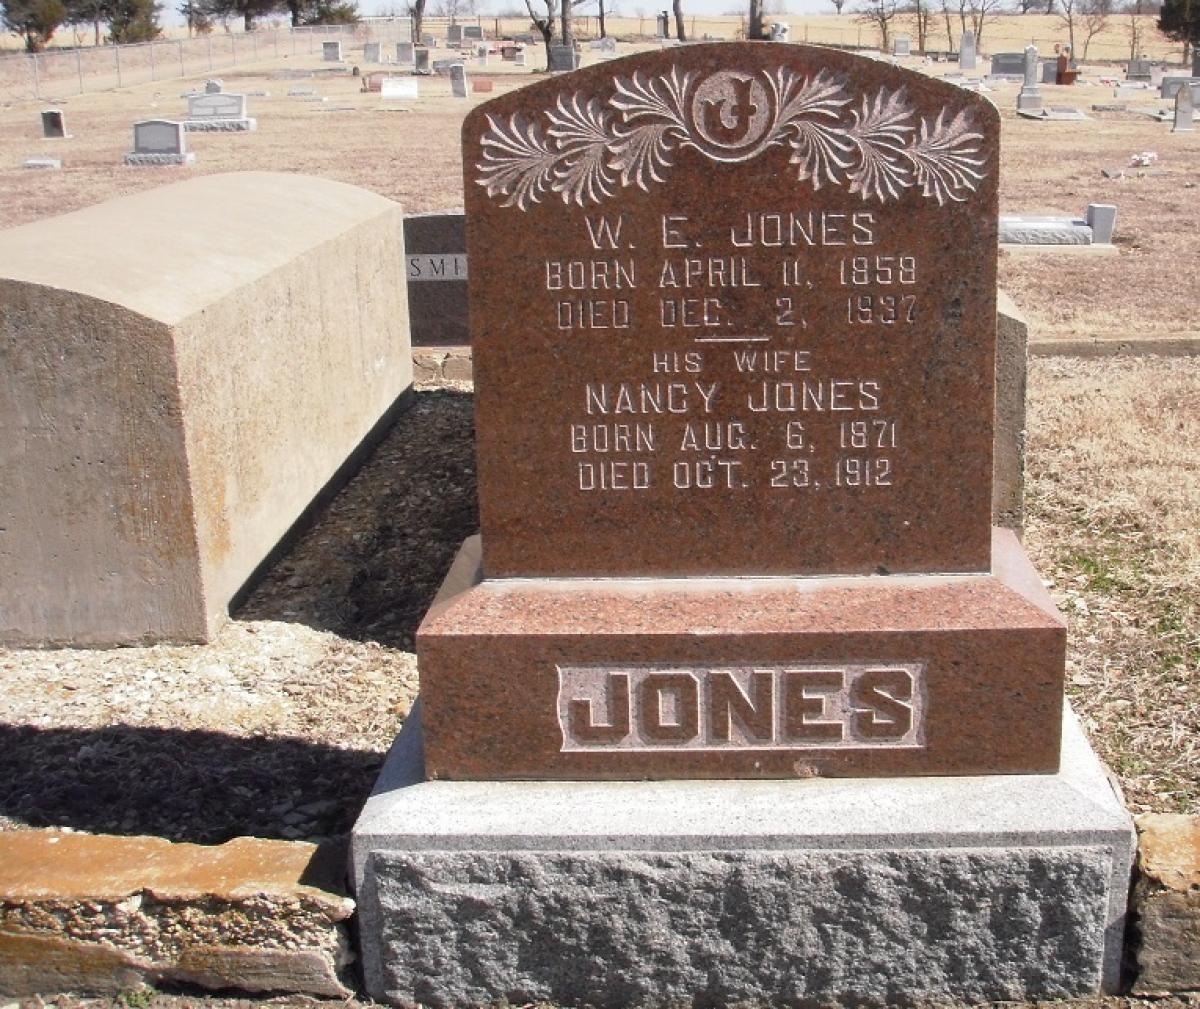 OK, Grove, Olympus Cemetery, Headstone, Jones, W. E. & Nancy 